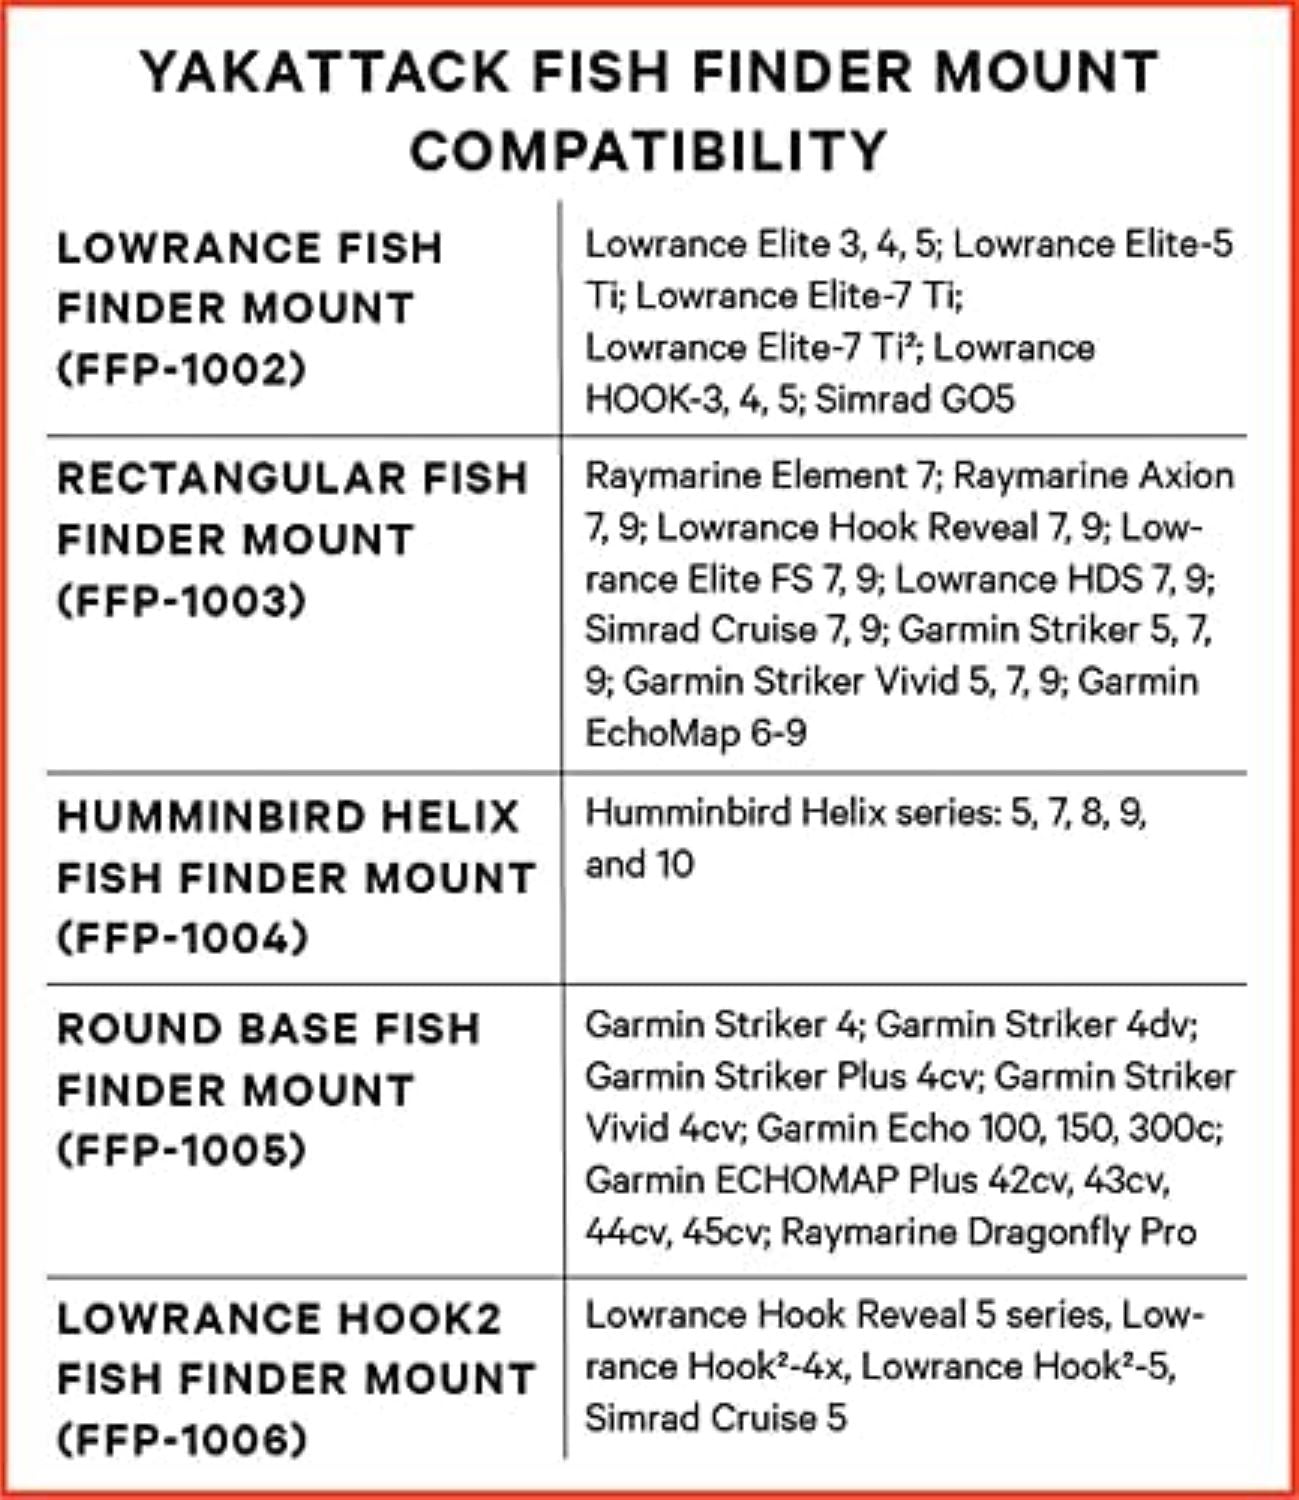 YakAttack Lowrance Hook 2, 4 and 5 Fish Finder Mount, Black - FFP-1006 